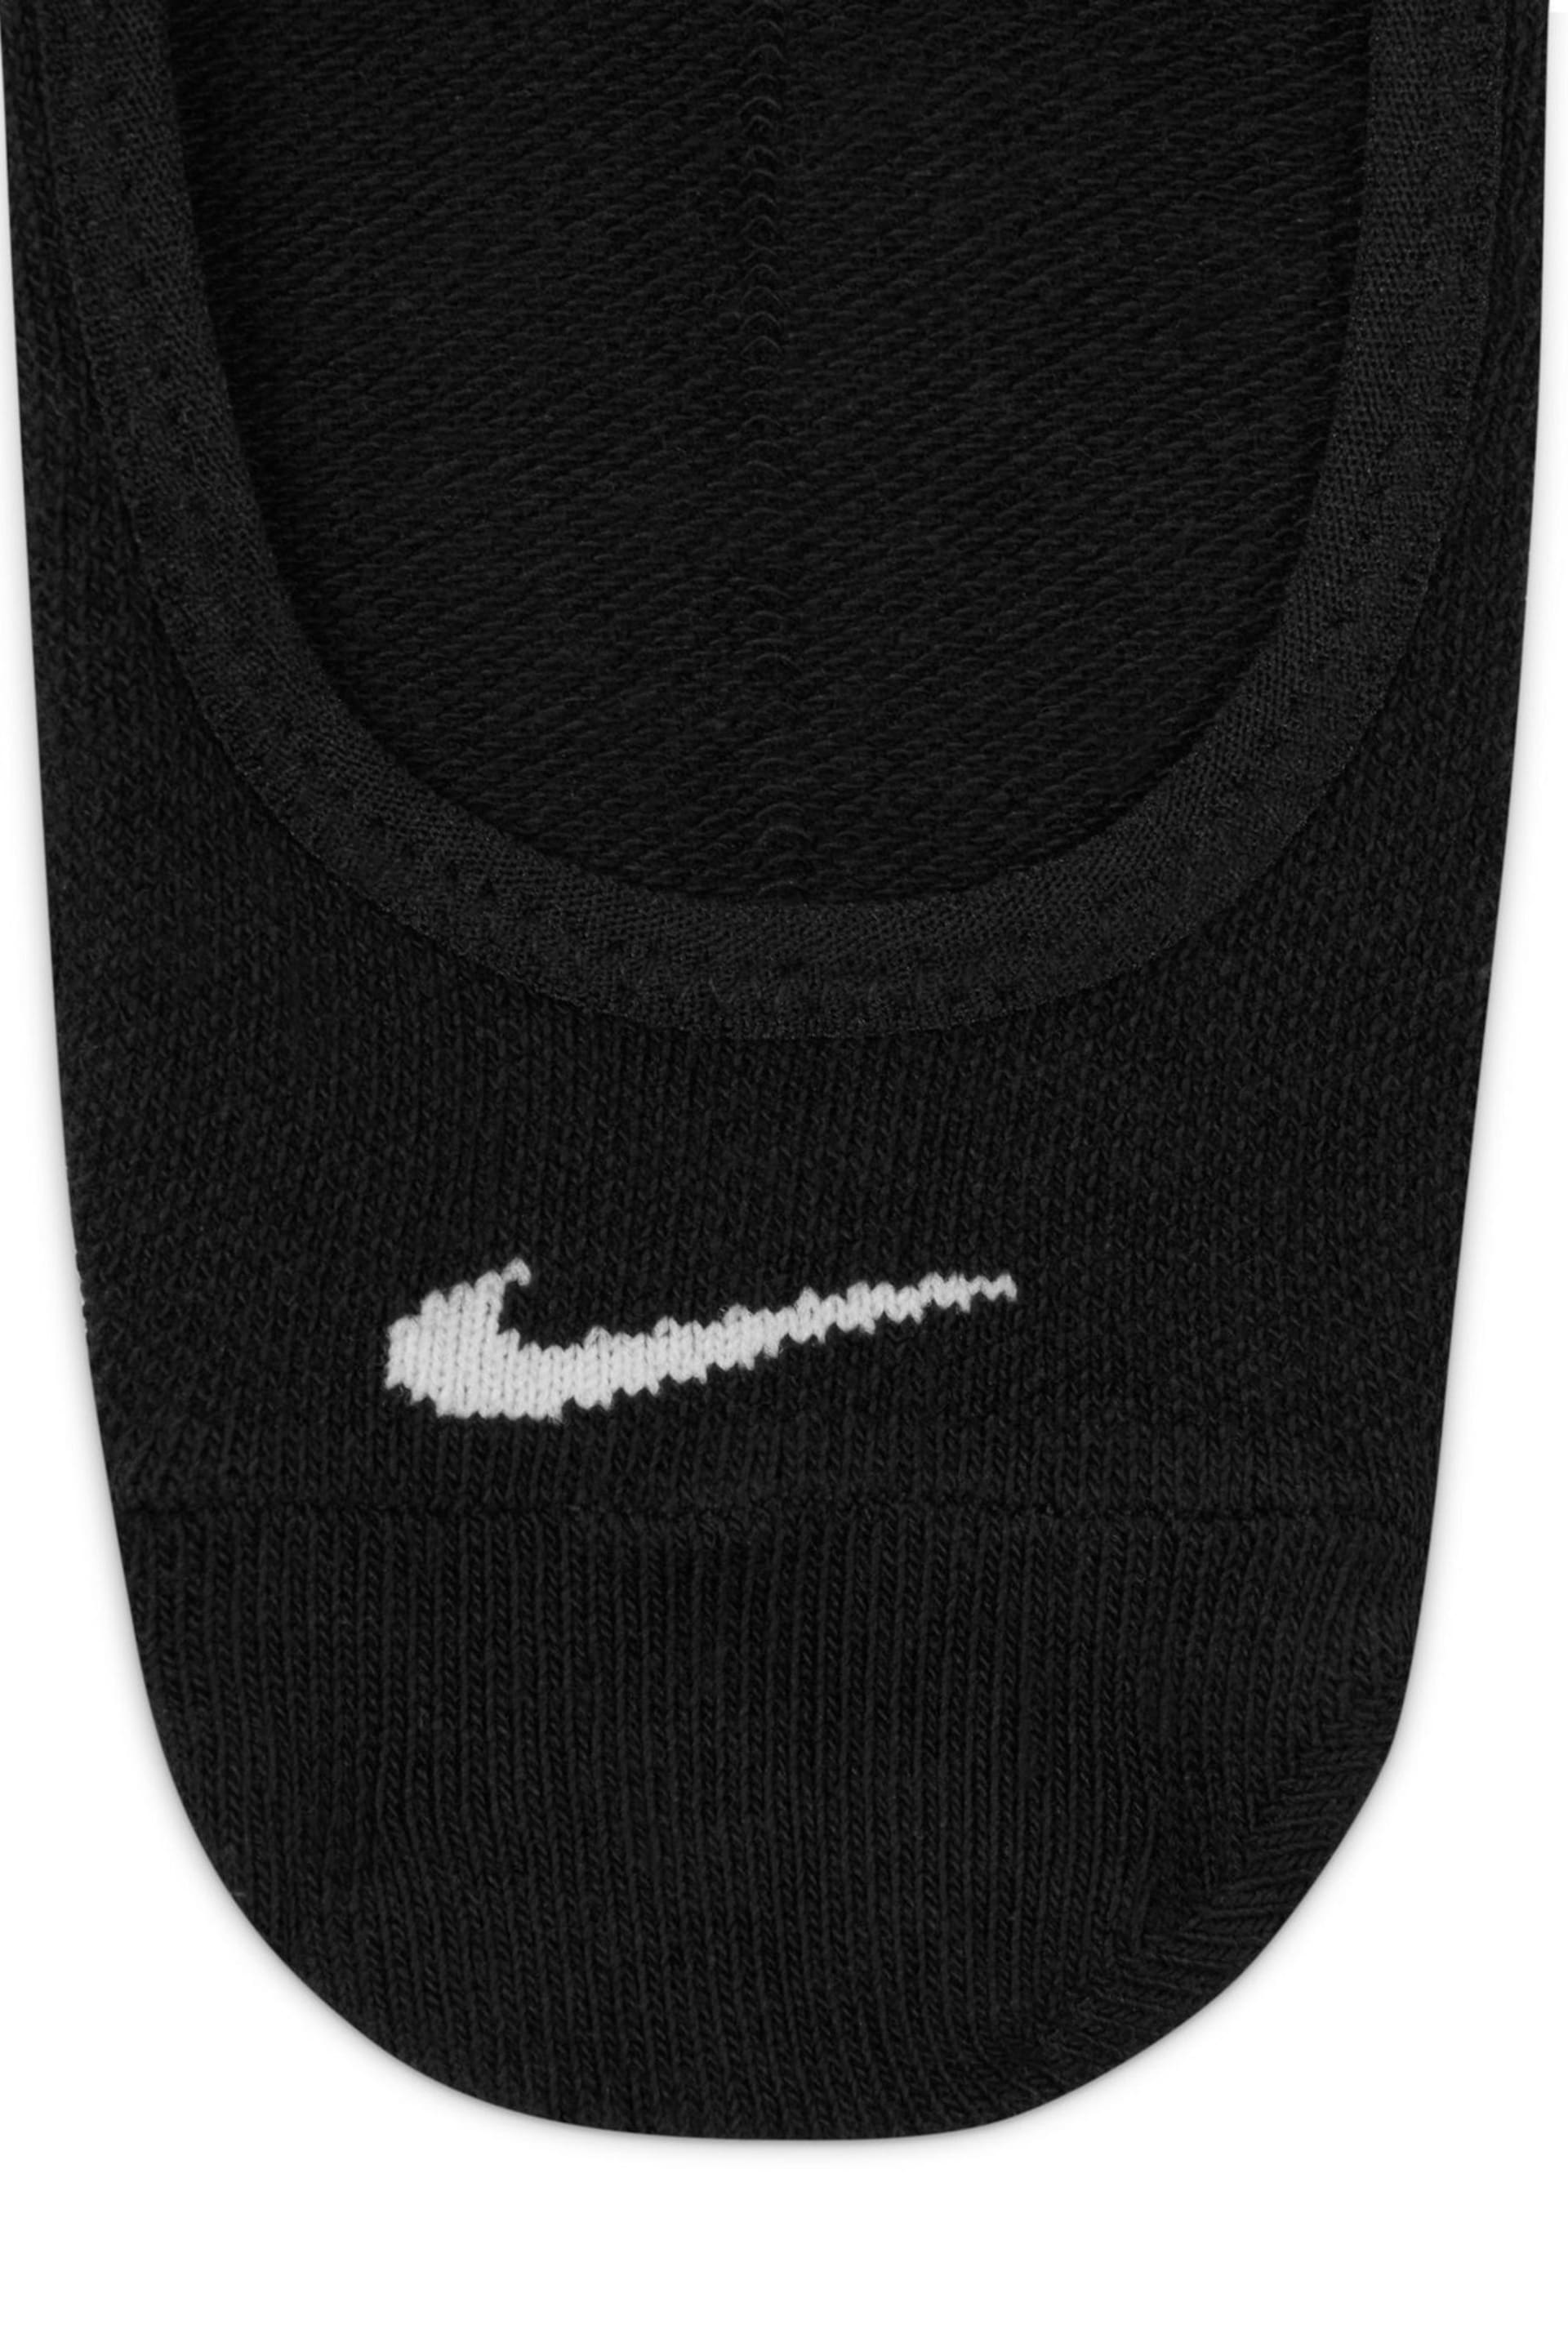 Nike Black Everyday Lightweight Training Footie Socks 3 Pack - Image 4 of 4